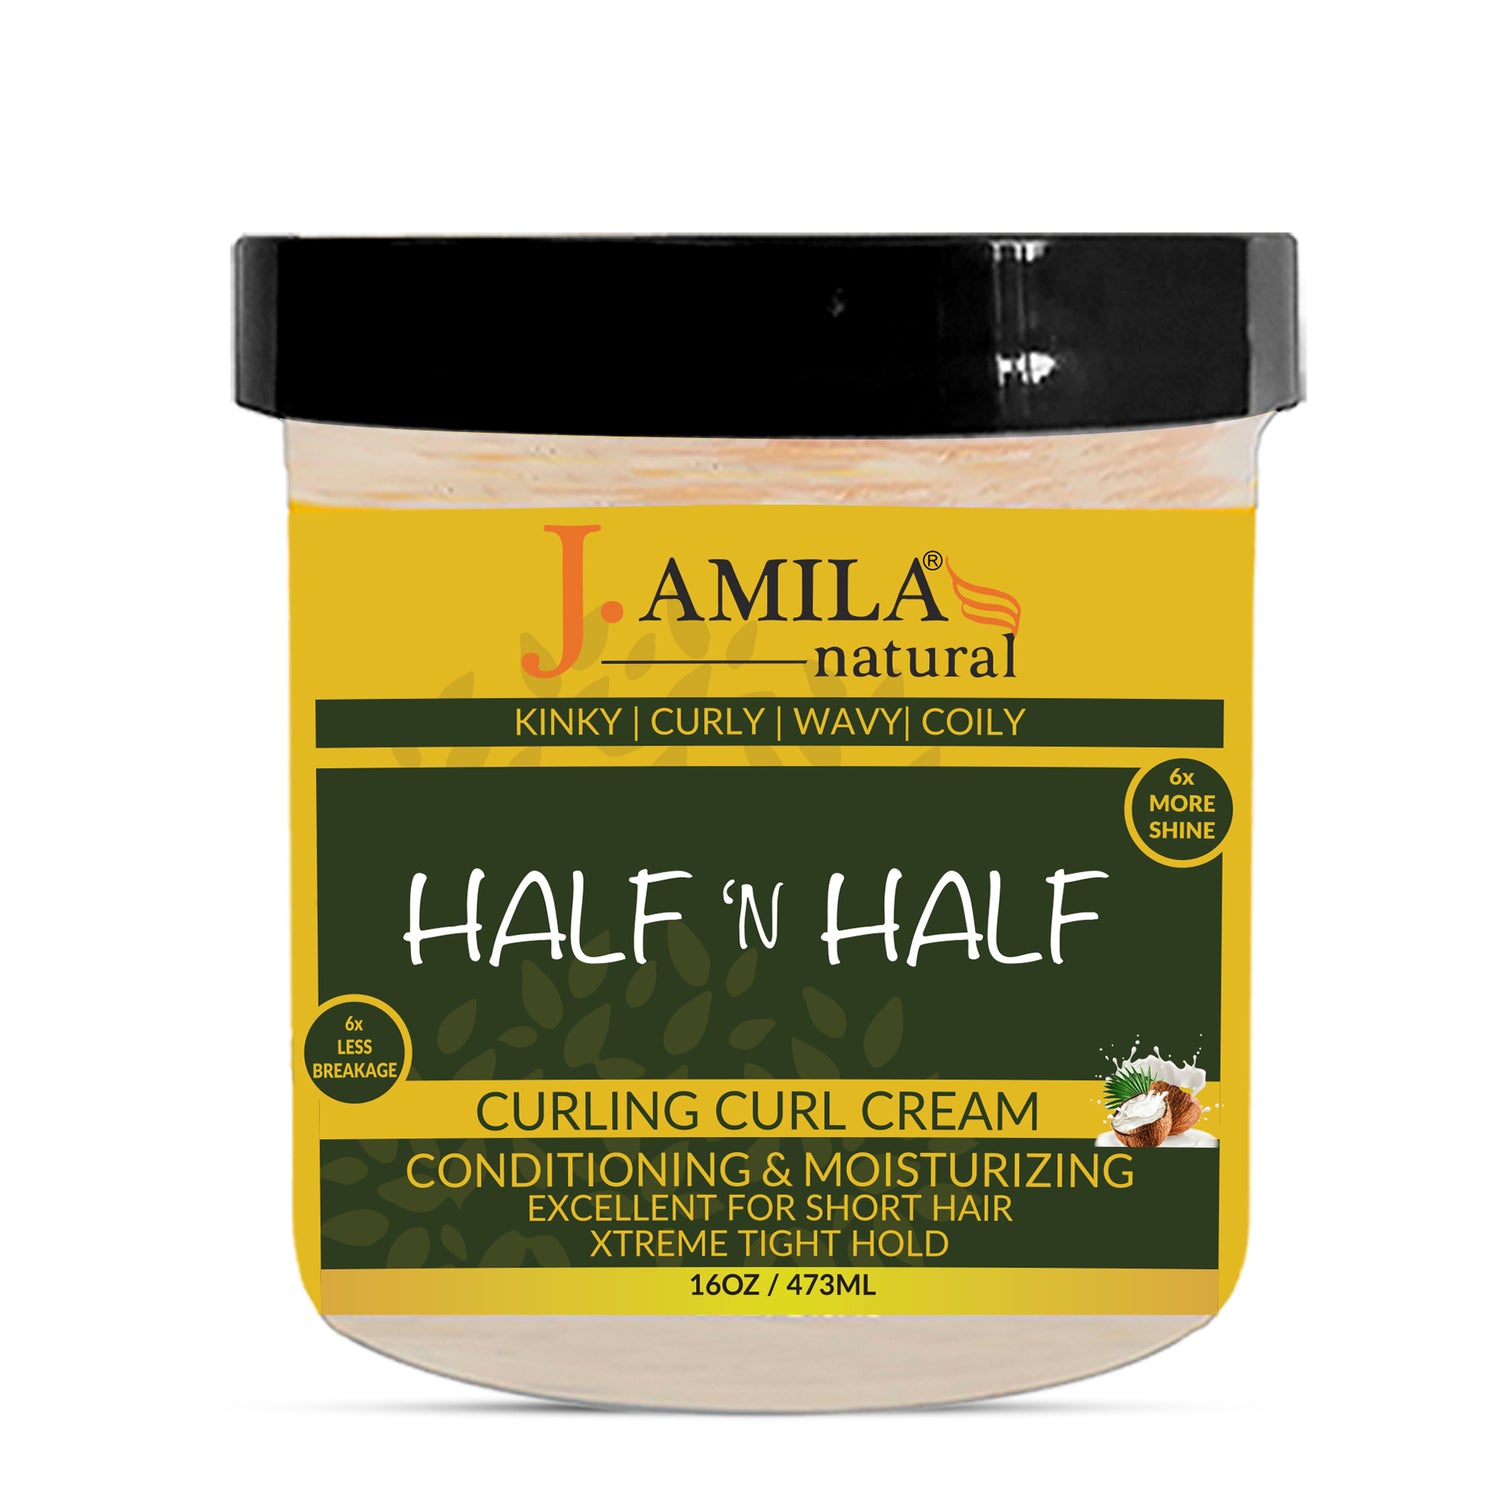 J. AMILA Award-Winning Half N’ Half Curl Cream (8oz)